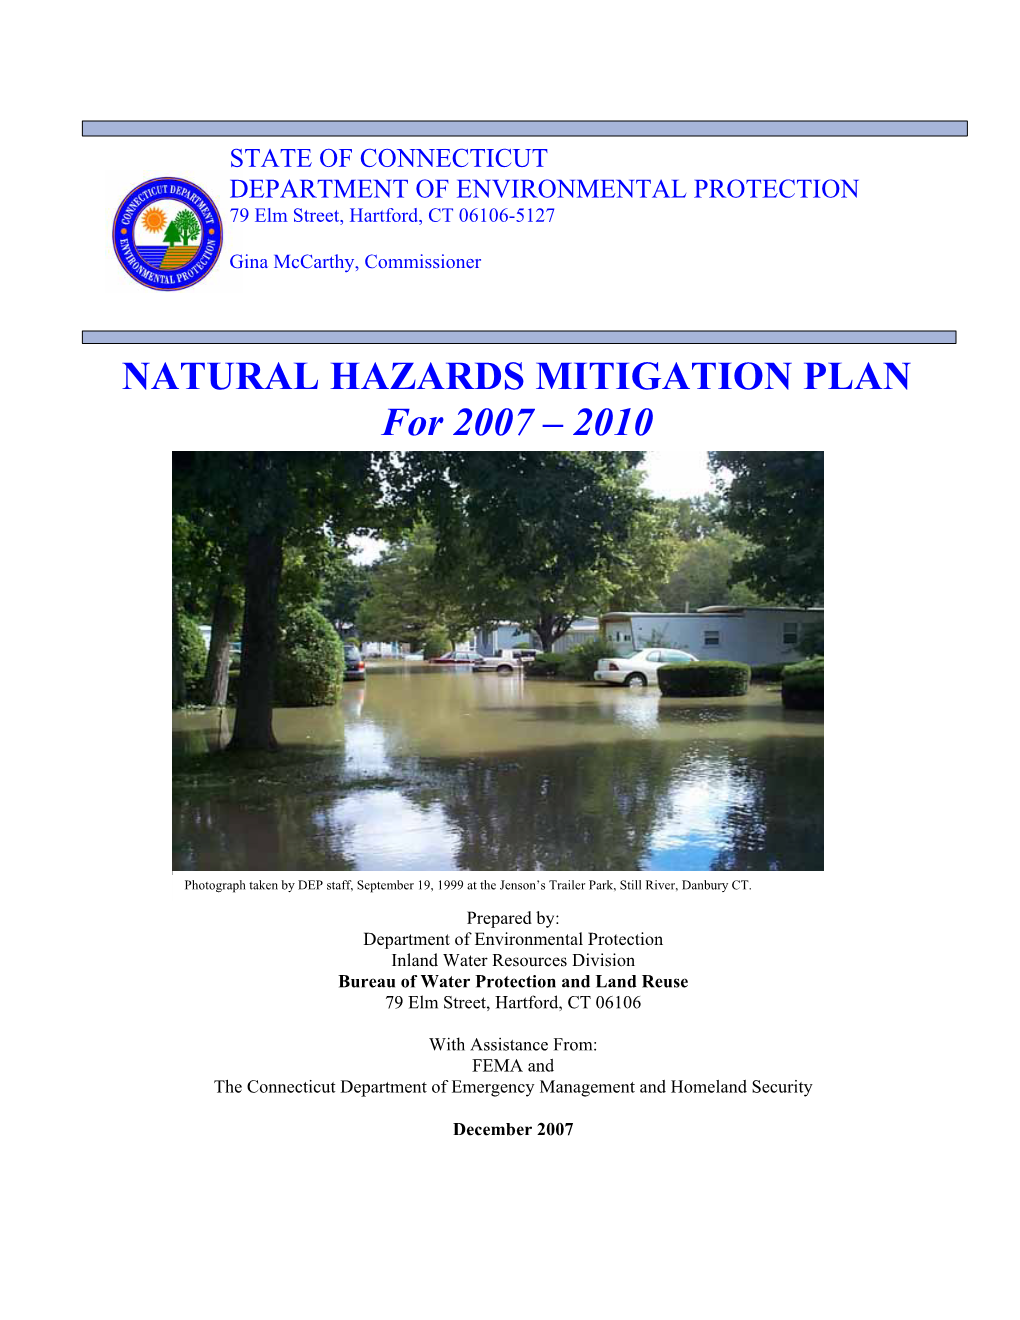 State of Connecticut Natural Hazards Mitigation Plan 2007-2010